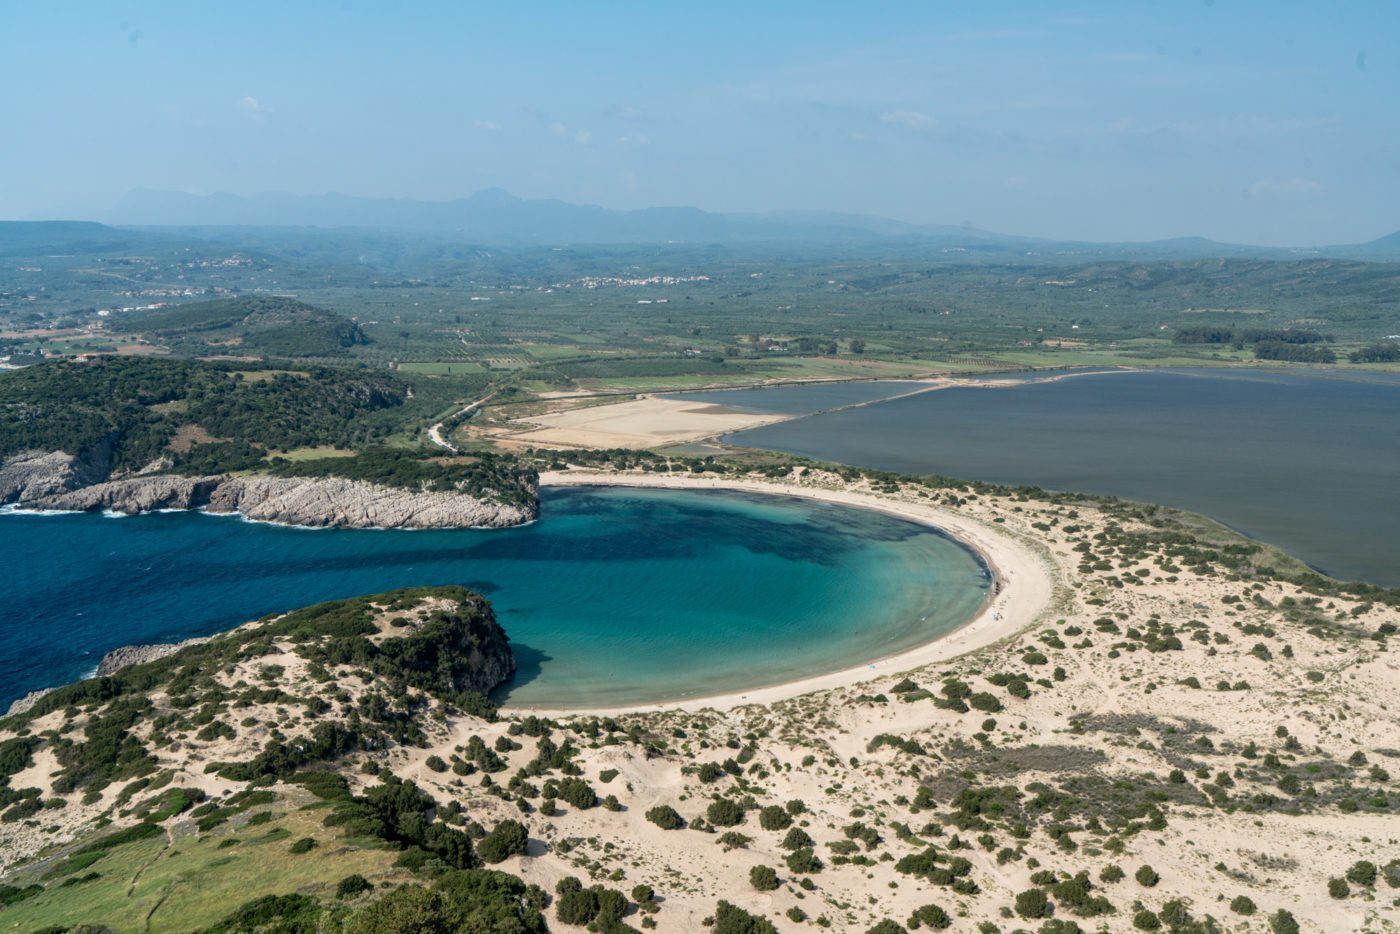 Voidikilia beach or Omega beach in the Greek Peloponnese